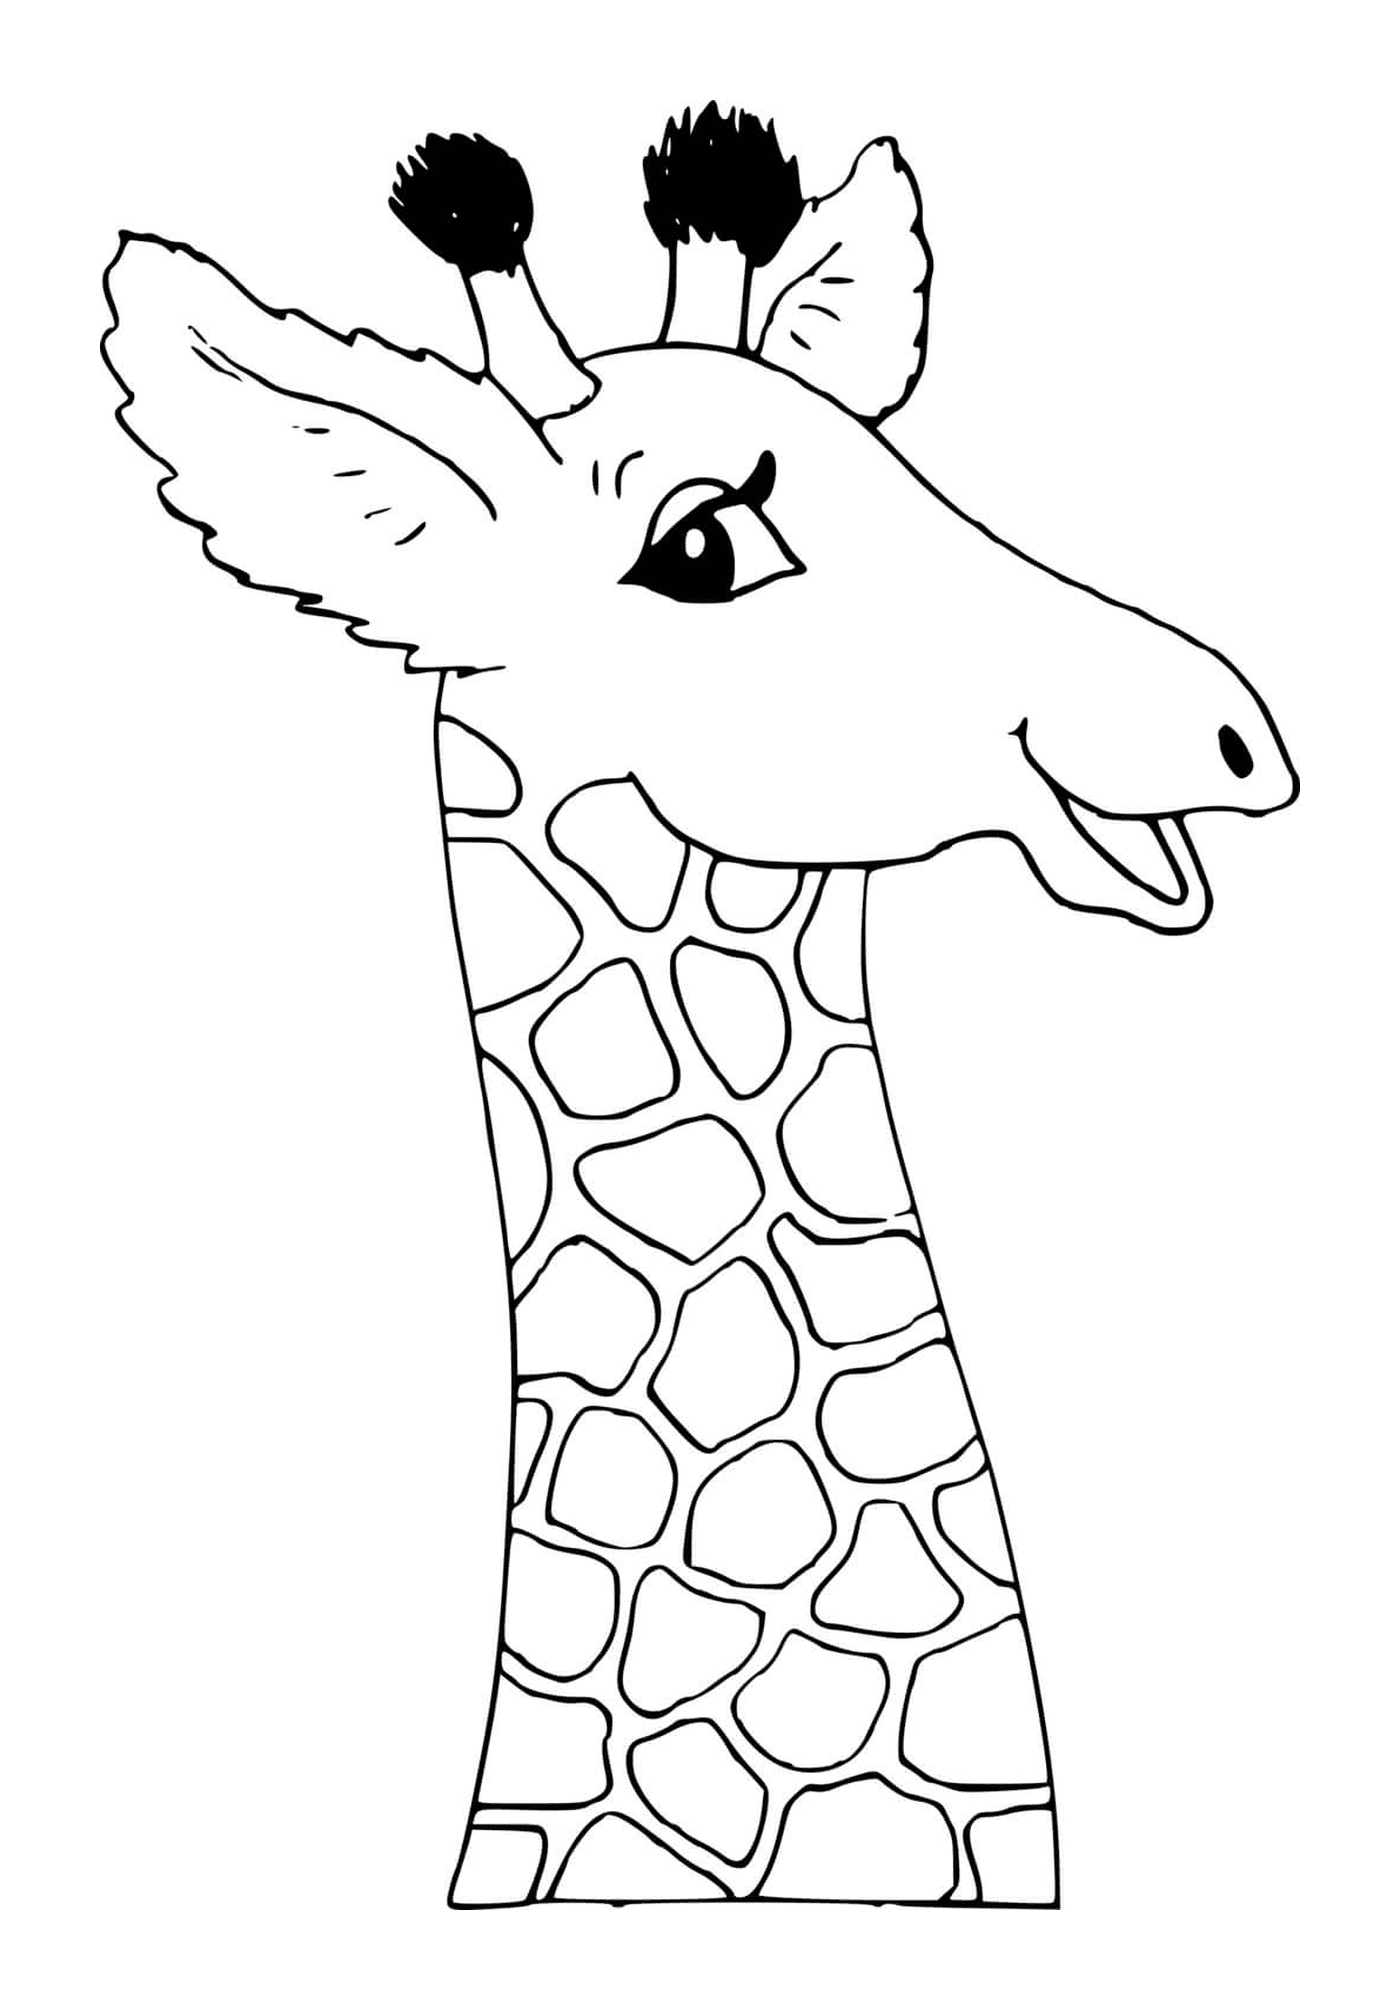  Шея и глава жирафа 